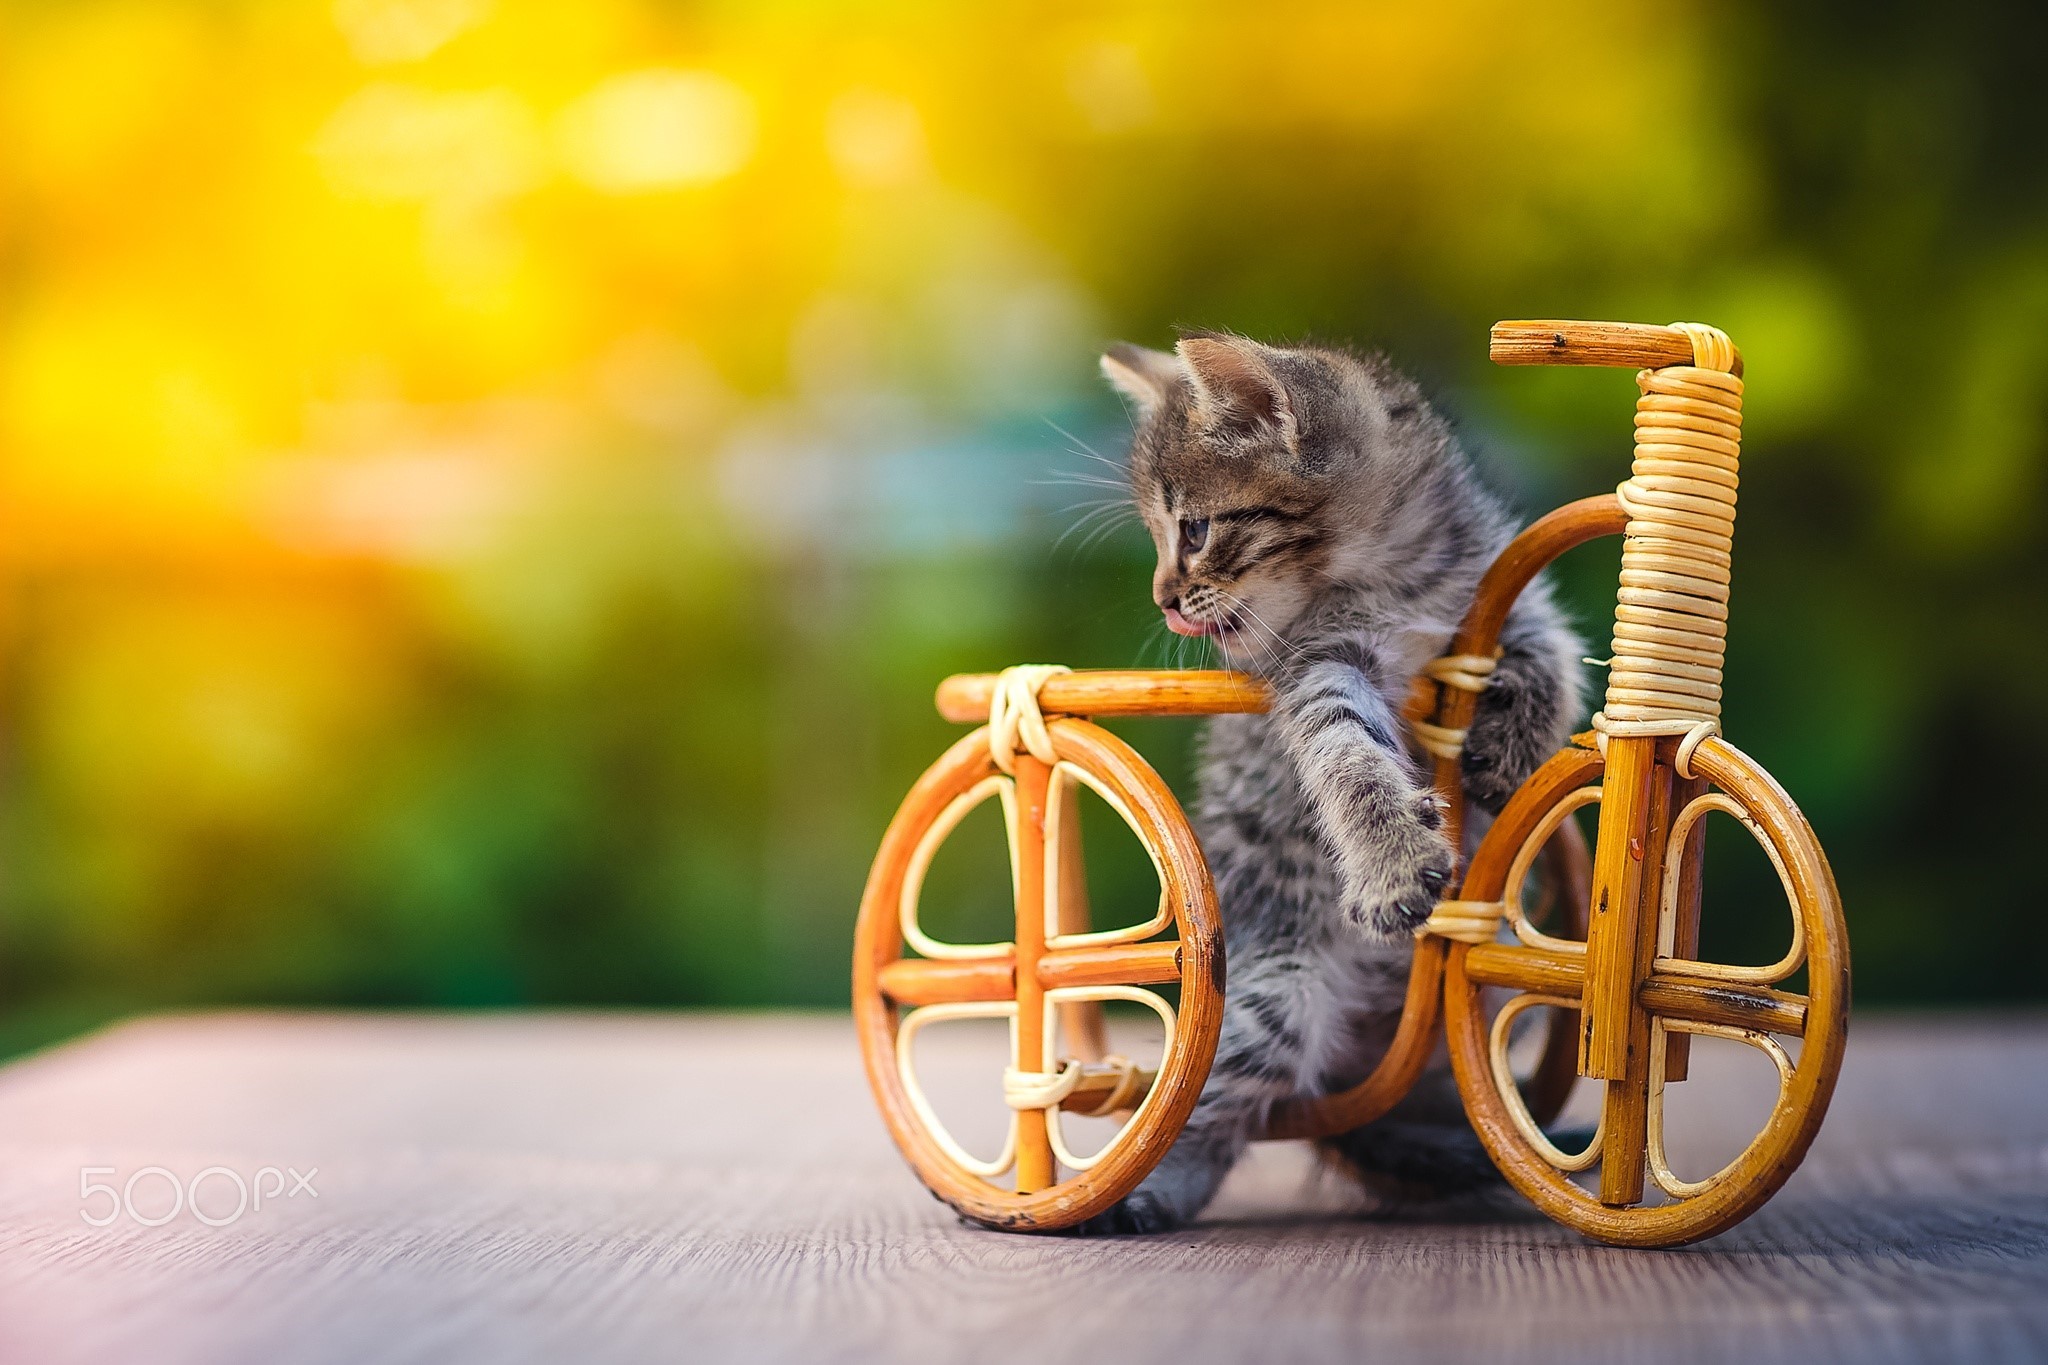 Котенок на велосипеде